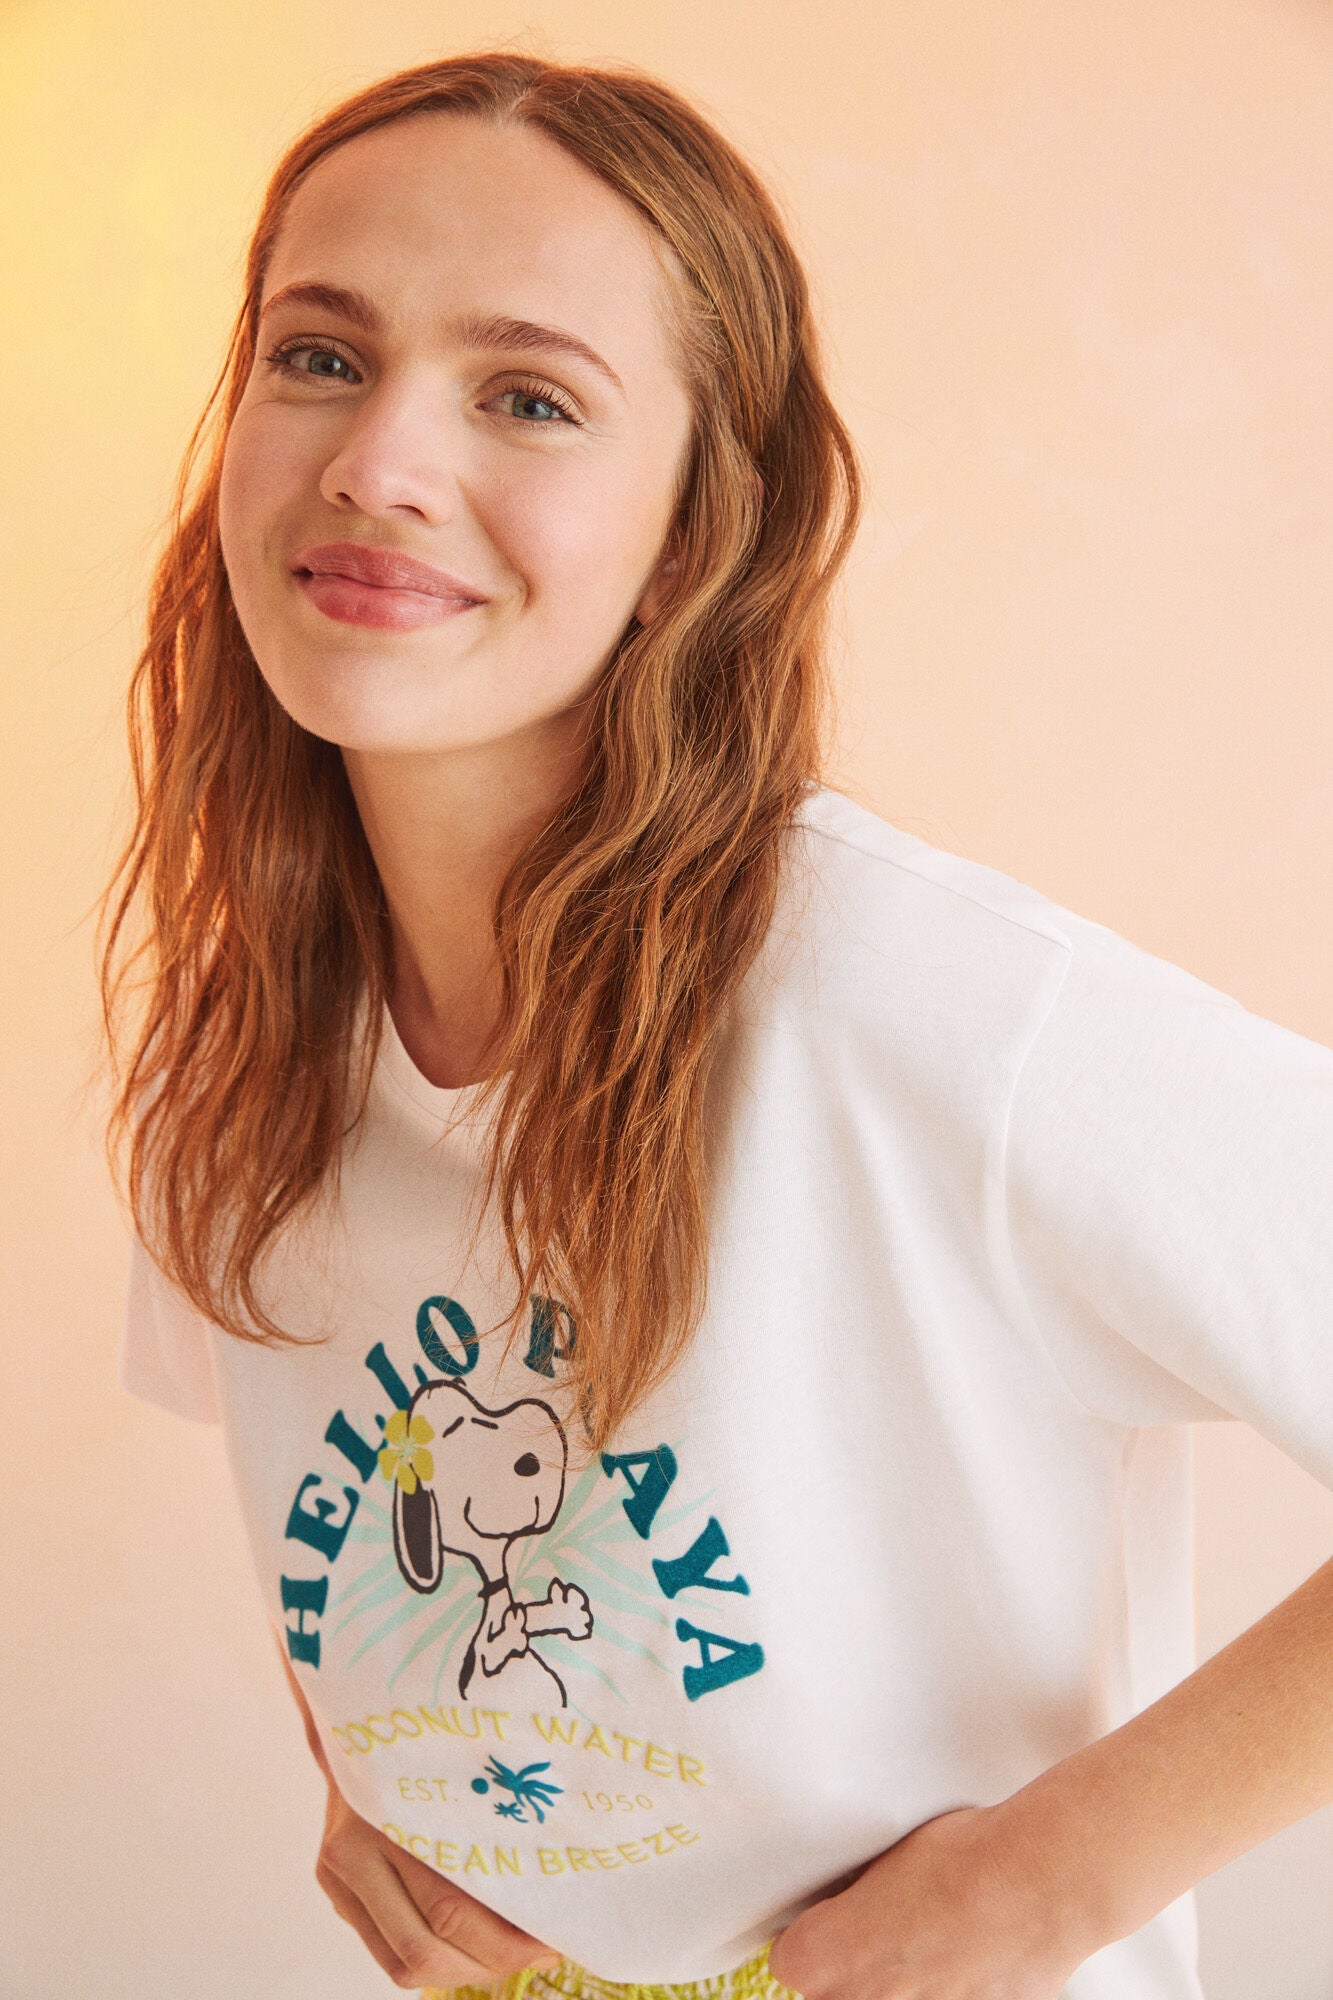 Snoopy T-shirt